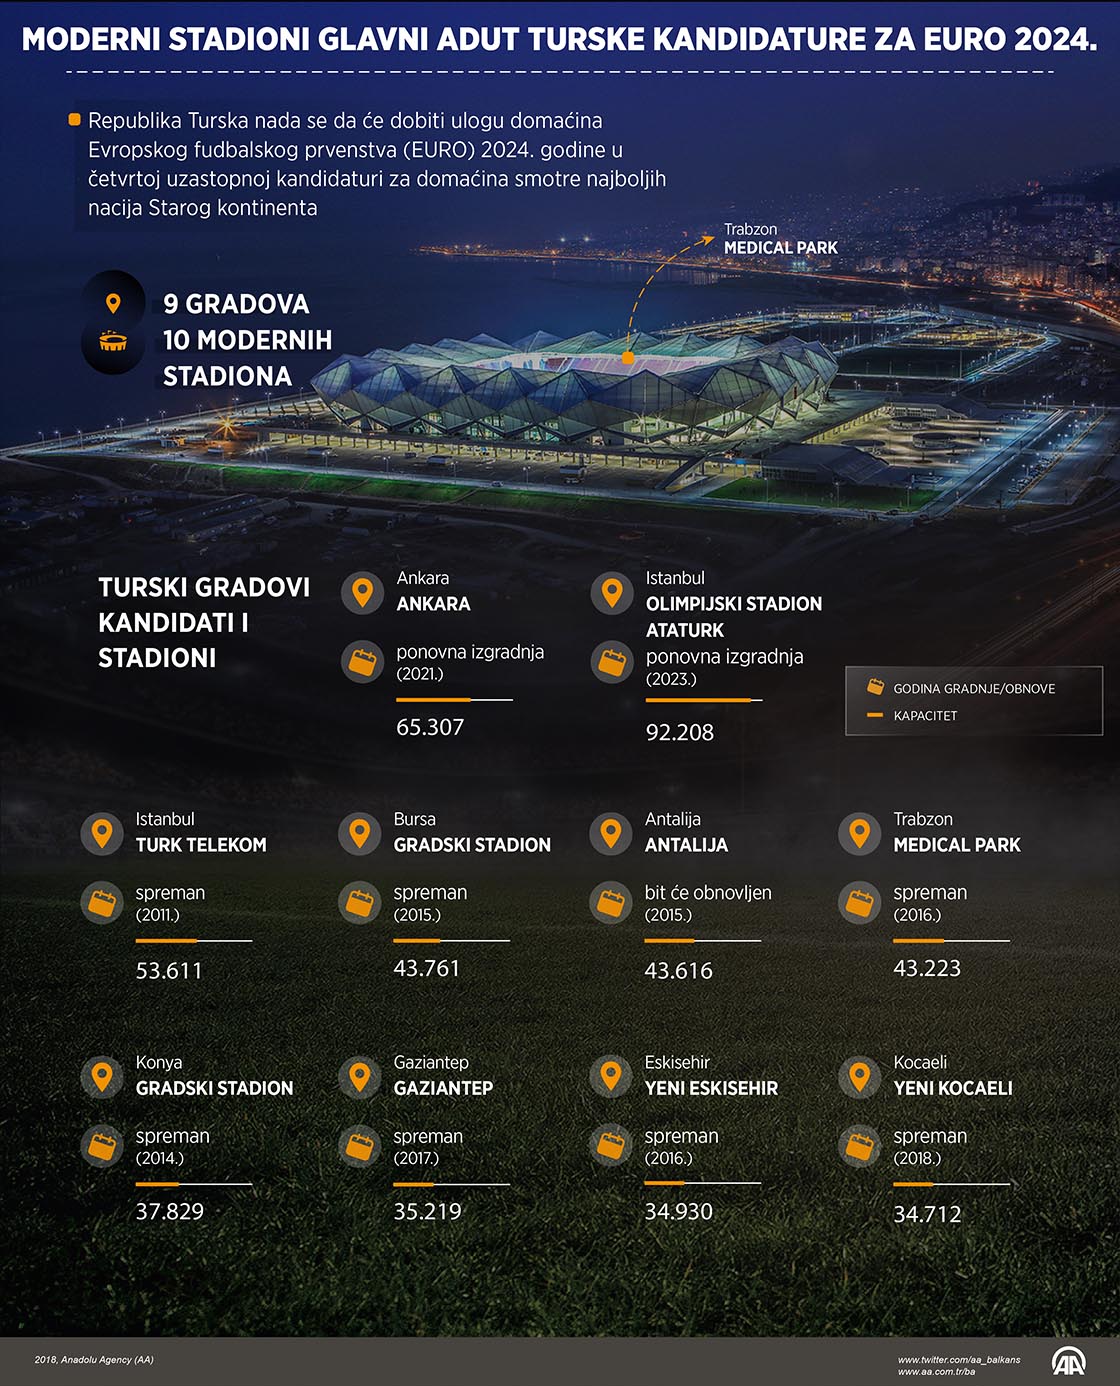 Moderni stadioni glavni adut turske kandidature za EURO 2024 